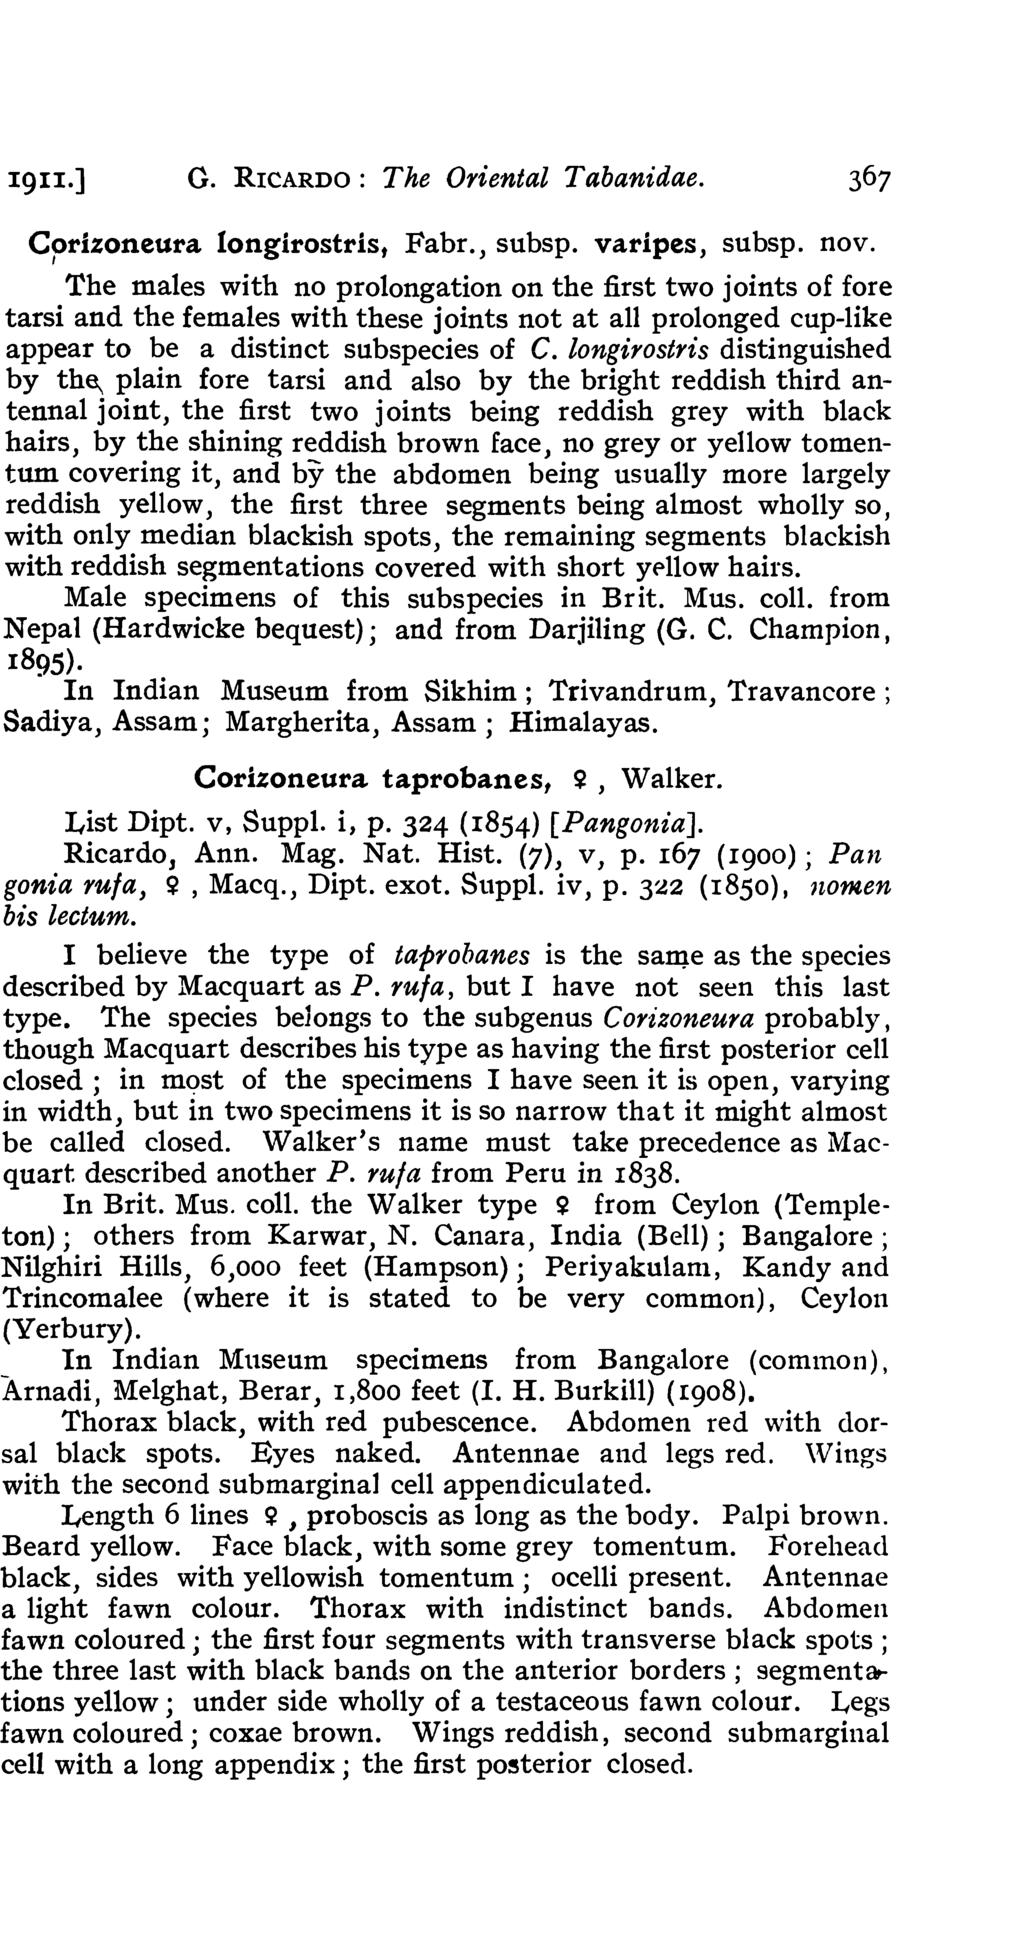 1911.] G. RICARDO: The Oriental Tabanidae. Corizoneura longirostris t Fabr., subsp. varipes, subsp. nov.